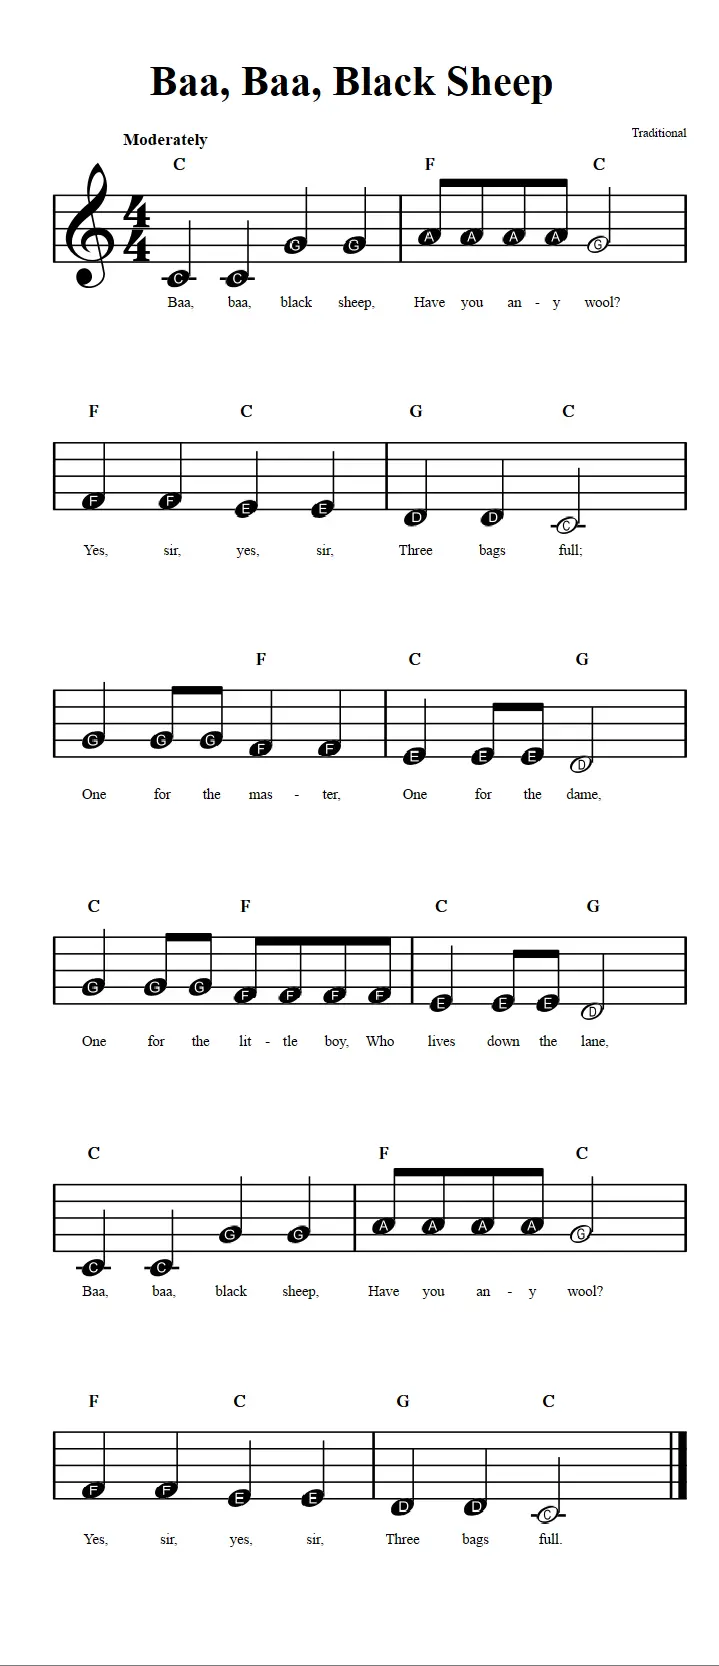 baa baa black sheep violin notes - What are the words to Baa Baa black sheep